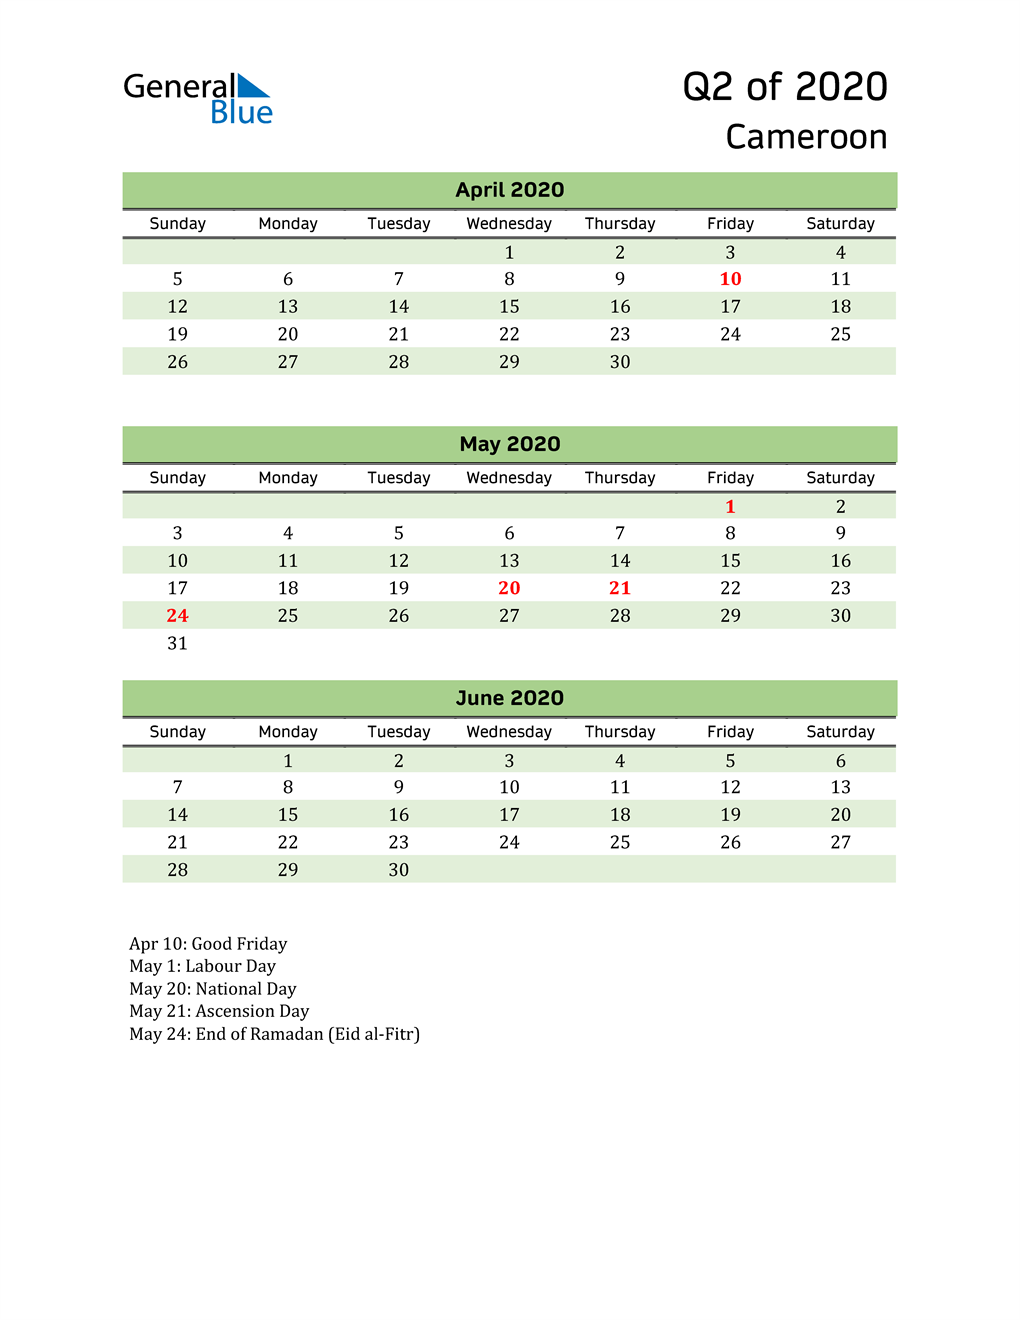  Quarterly Calendar 2020 with Cameroon Holidays 